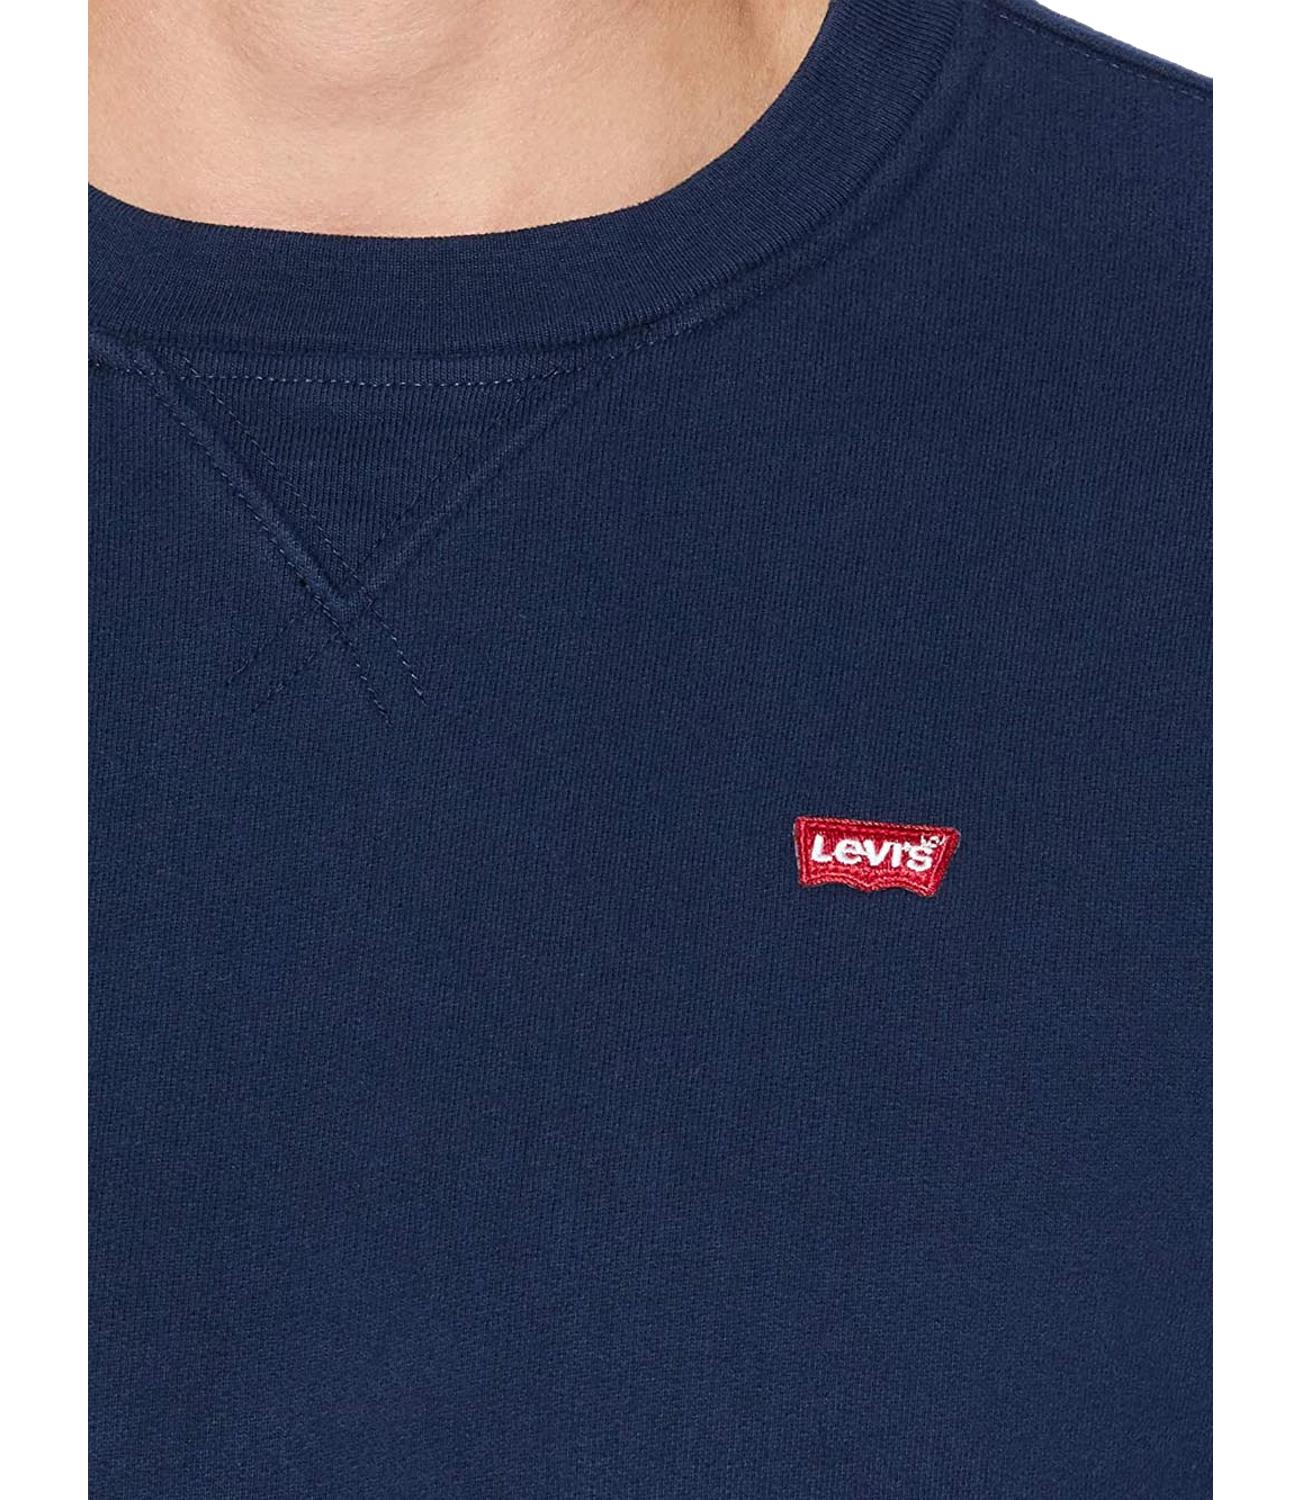 Levis Men's blue brushed crewneck sweatshirt with small logo